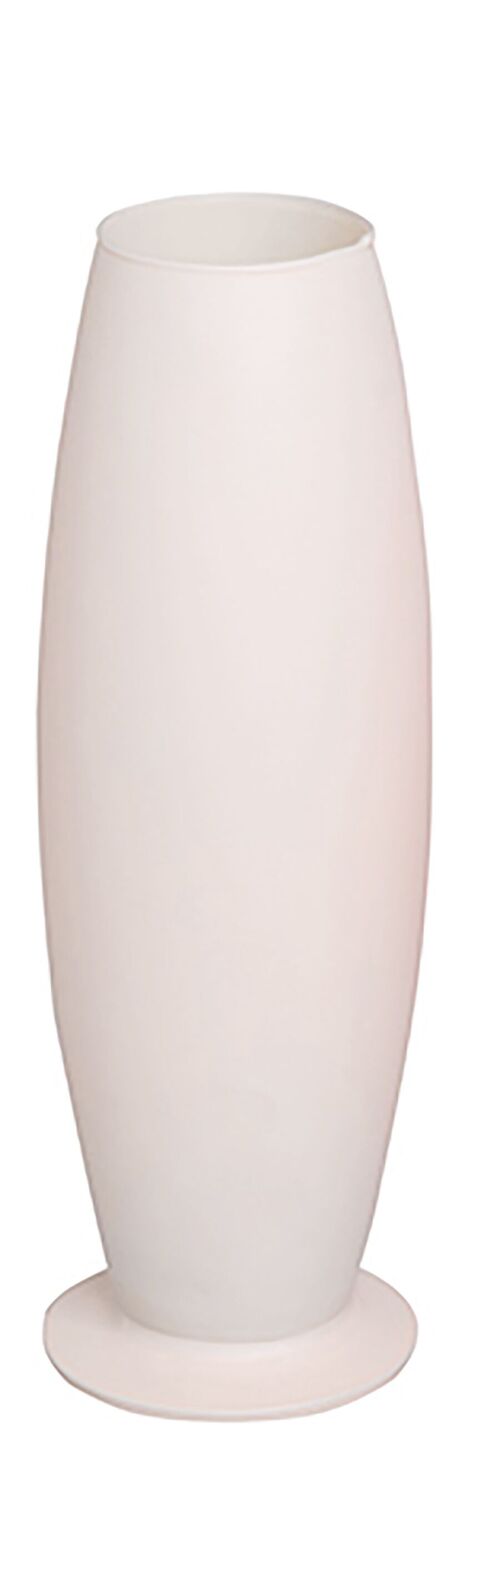 Modern glass vase in white. Origin: Spain Dimension: 7x10x30cm EE-005B